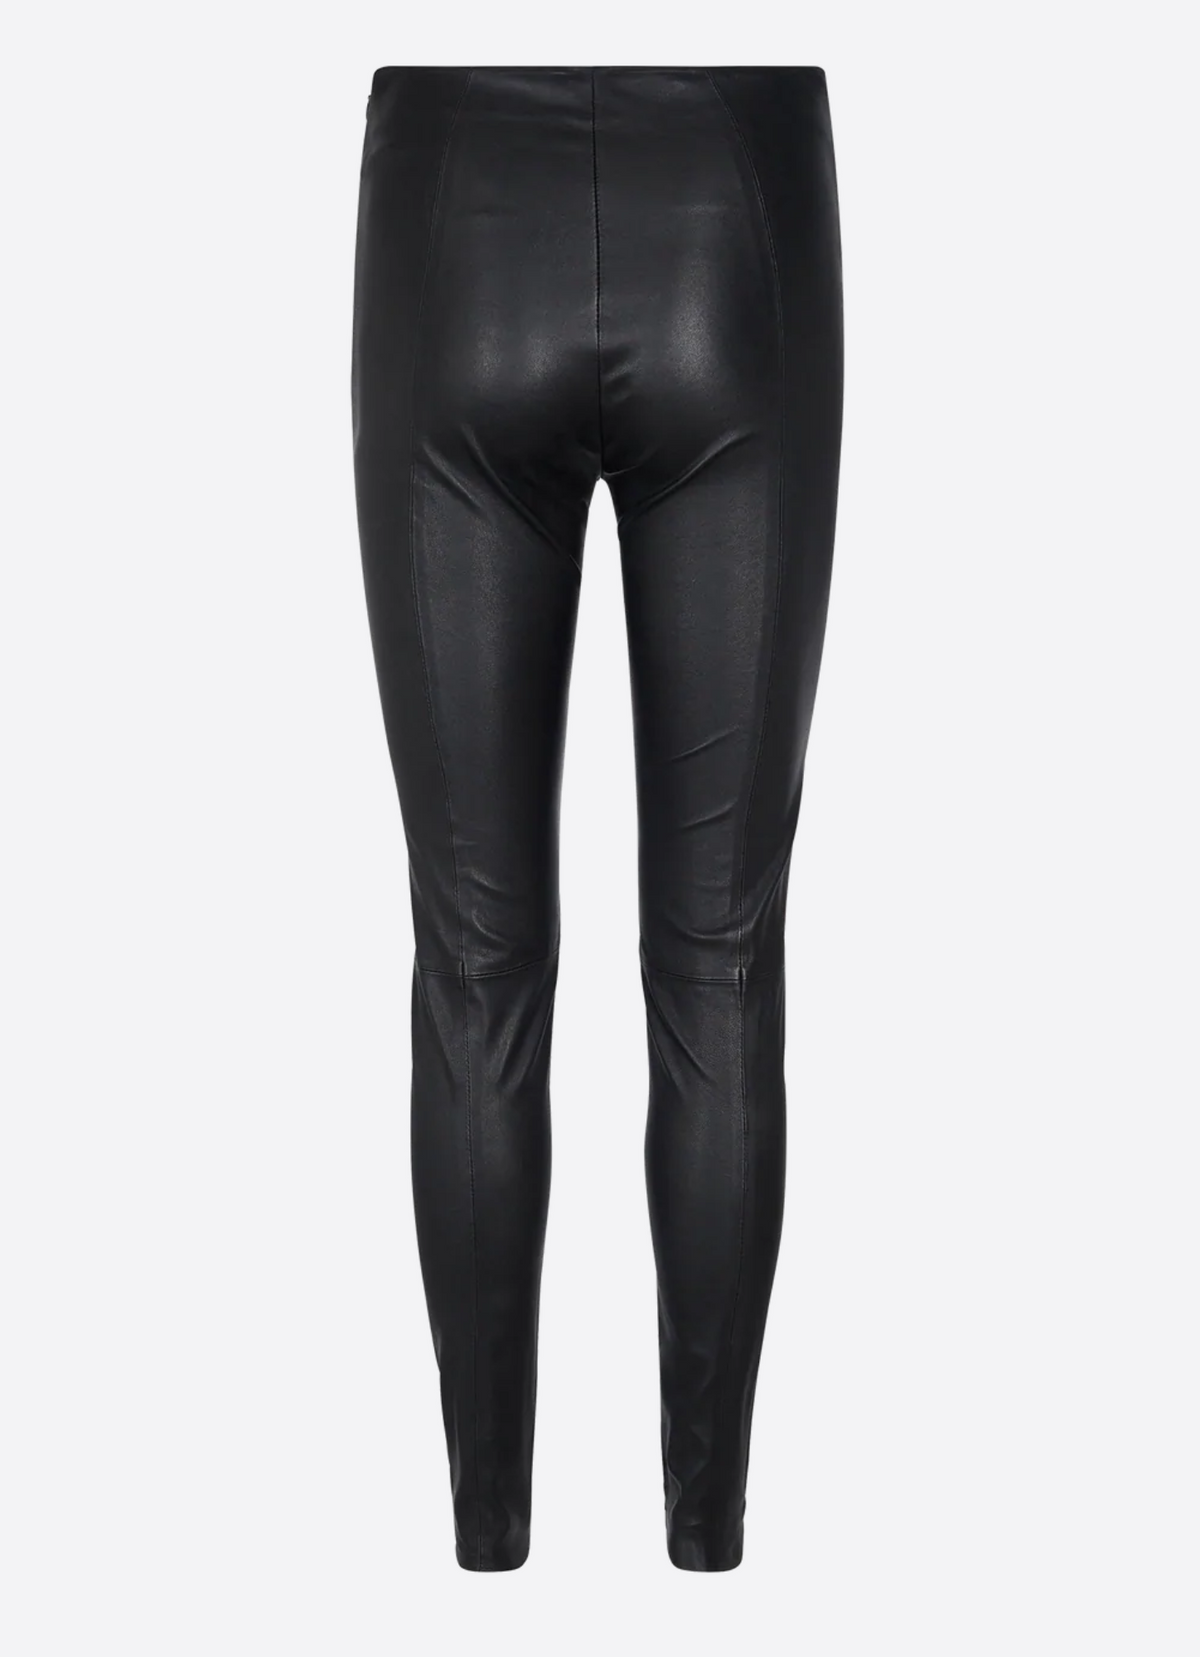 Black leather leggings 